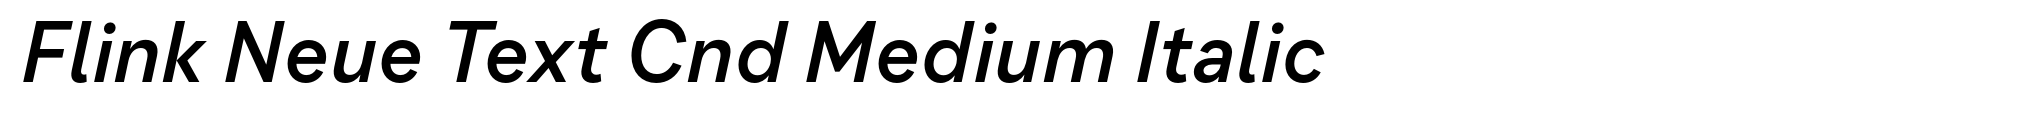 Flink Neue Text Cnd Medium Italic image